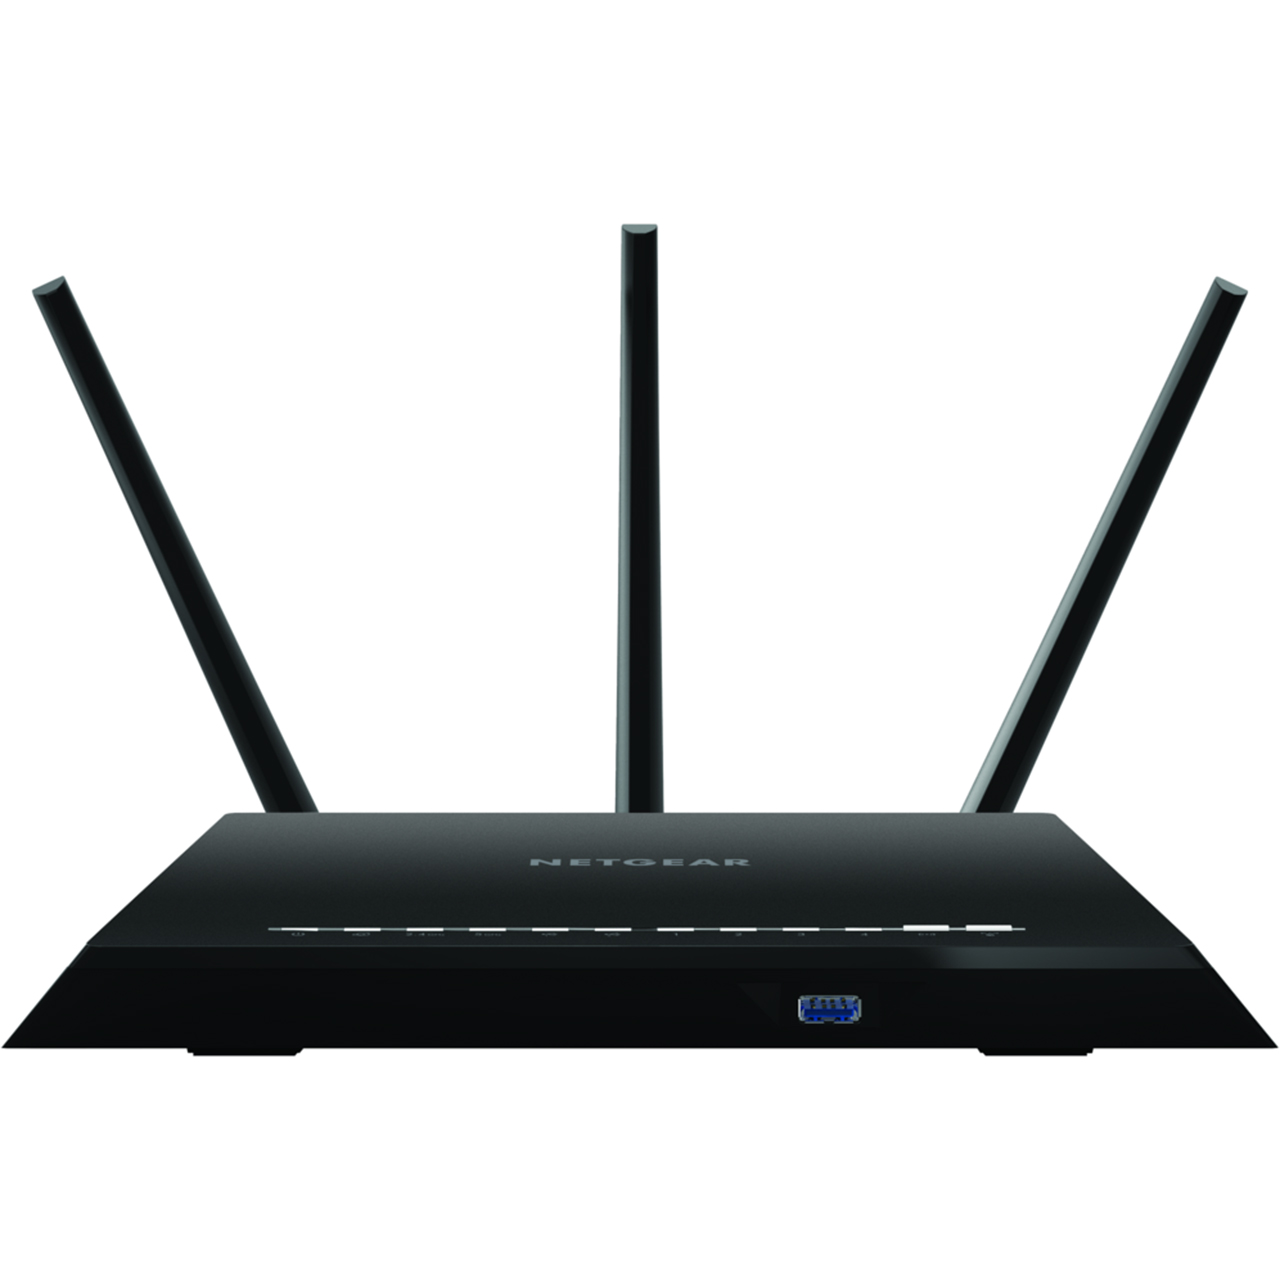 Netgear R7000 Wireless Router Review